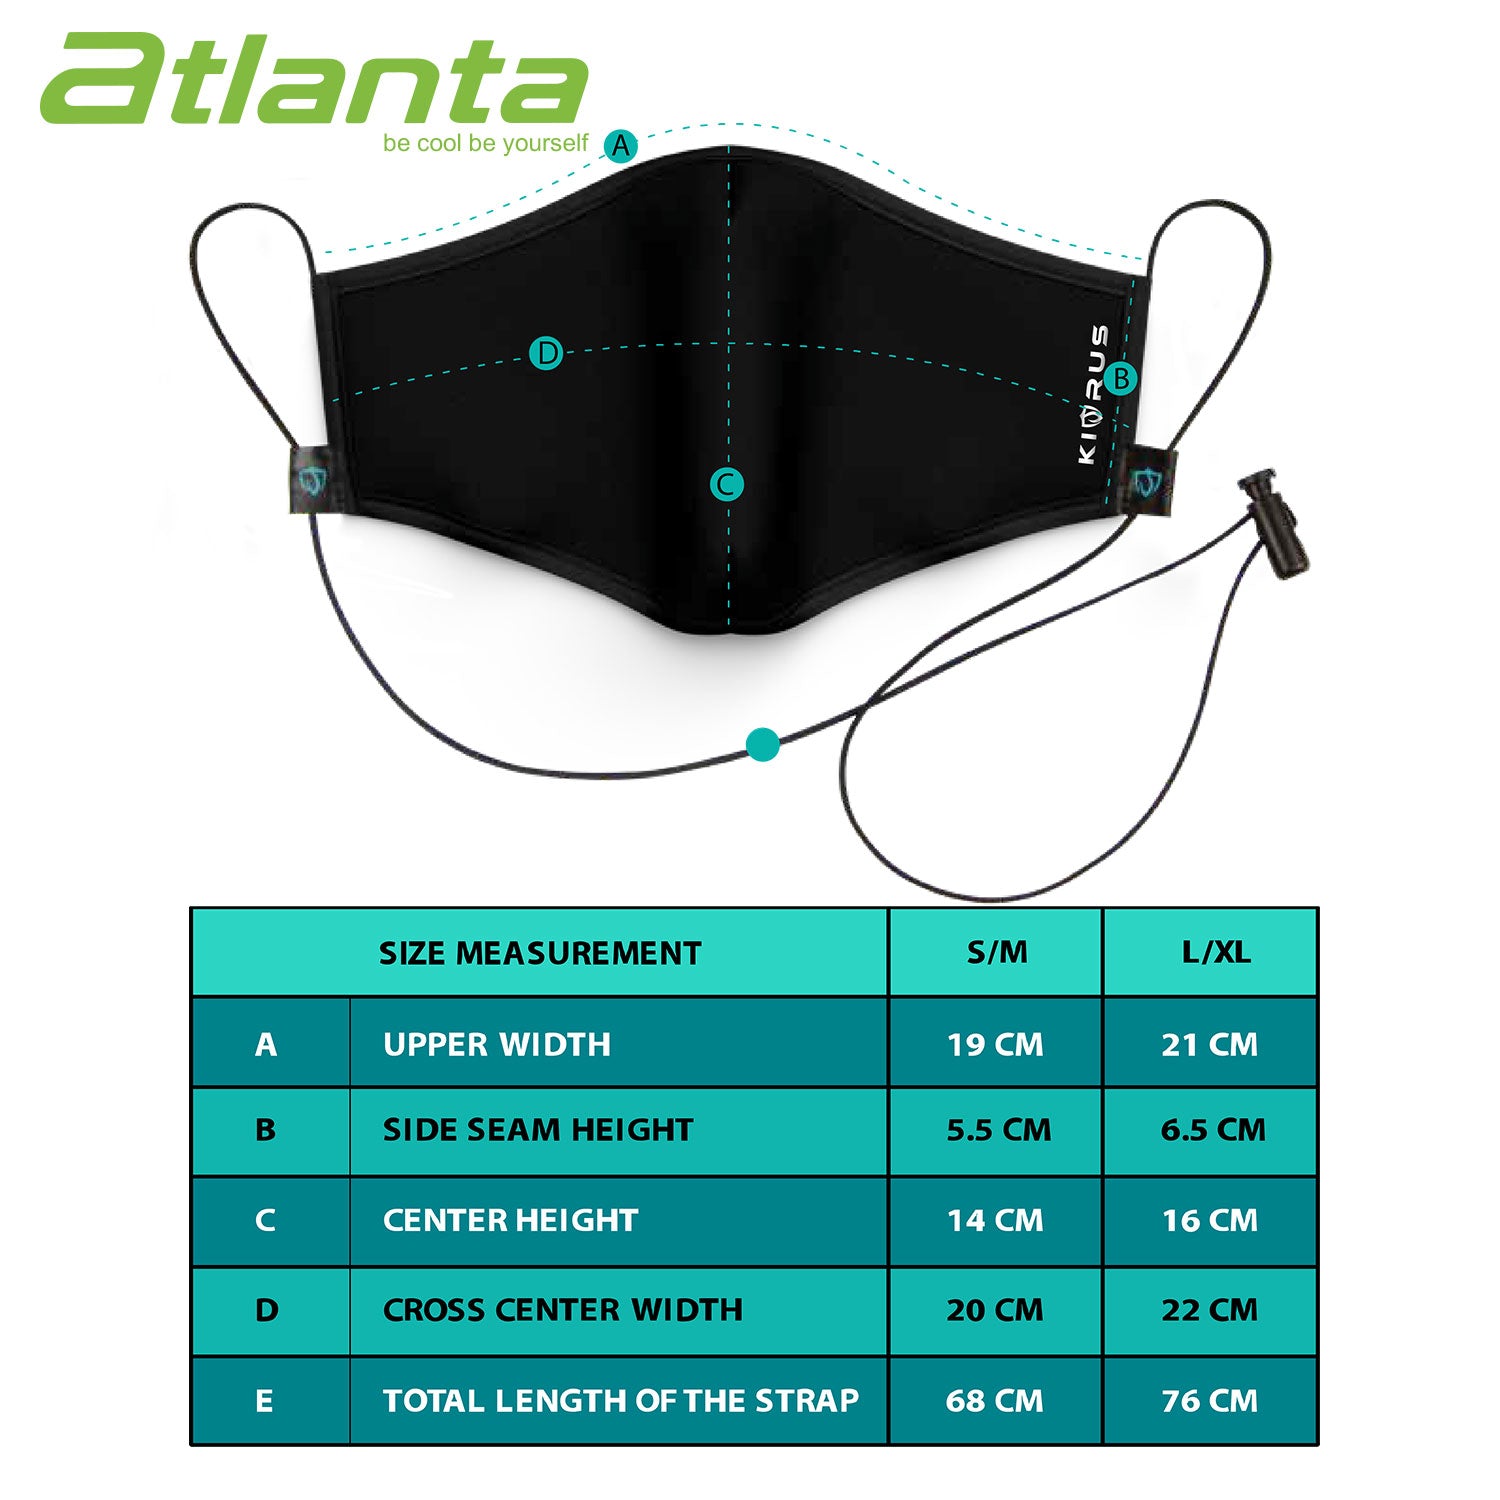 Atlanta X Kivrus 4 Layer Reusable Face Mask (Brush Navy)